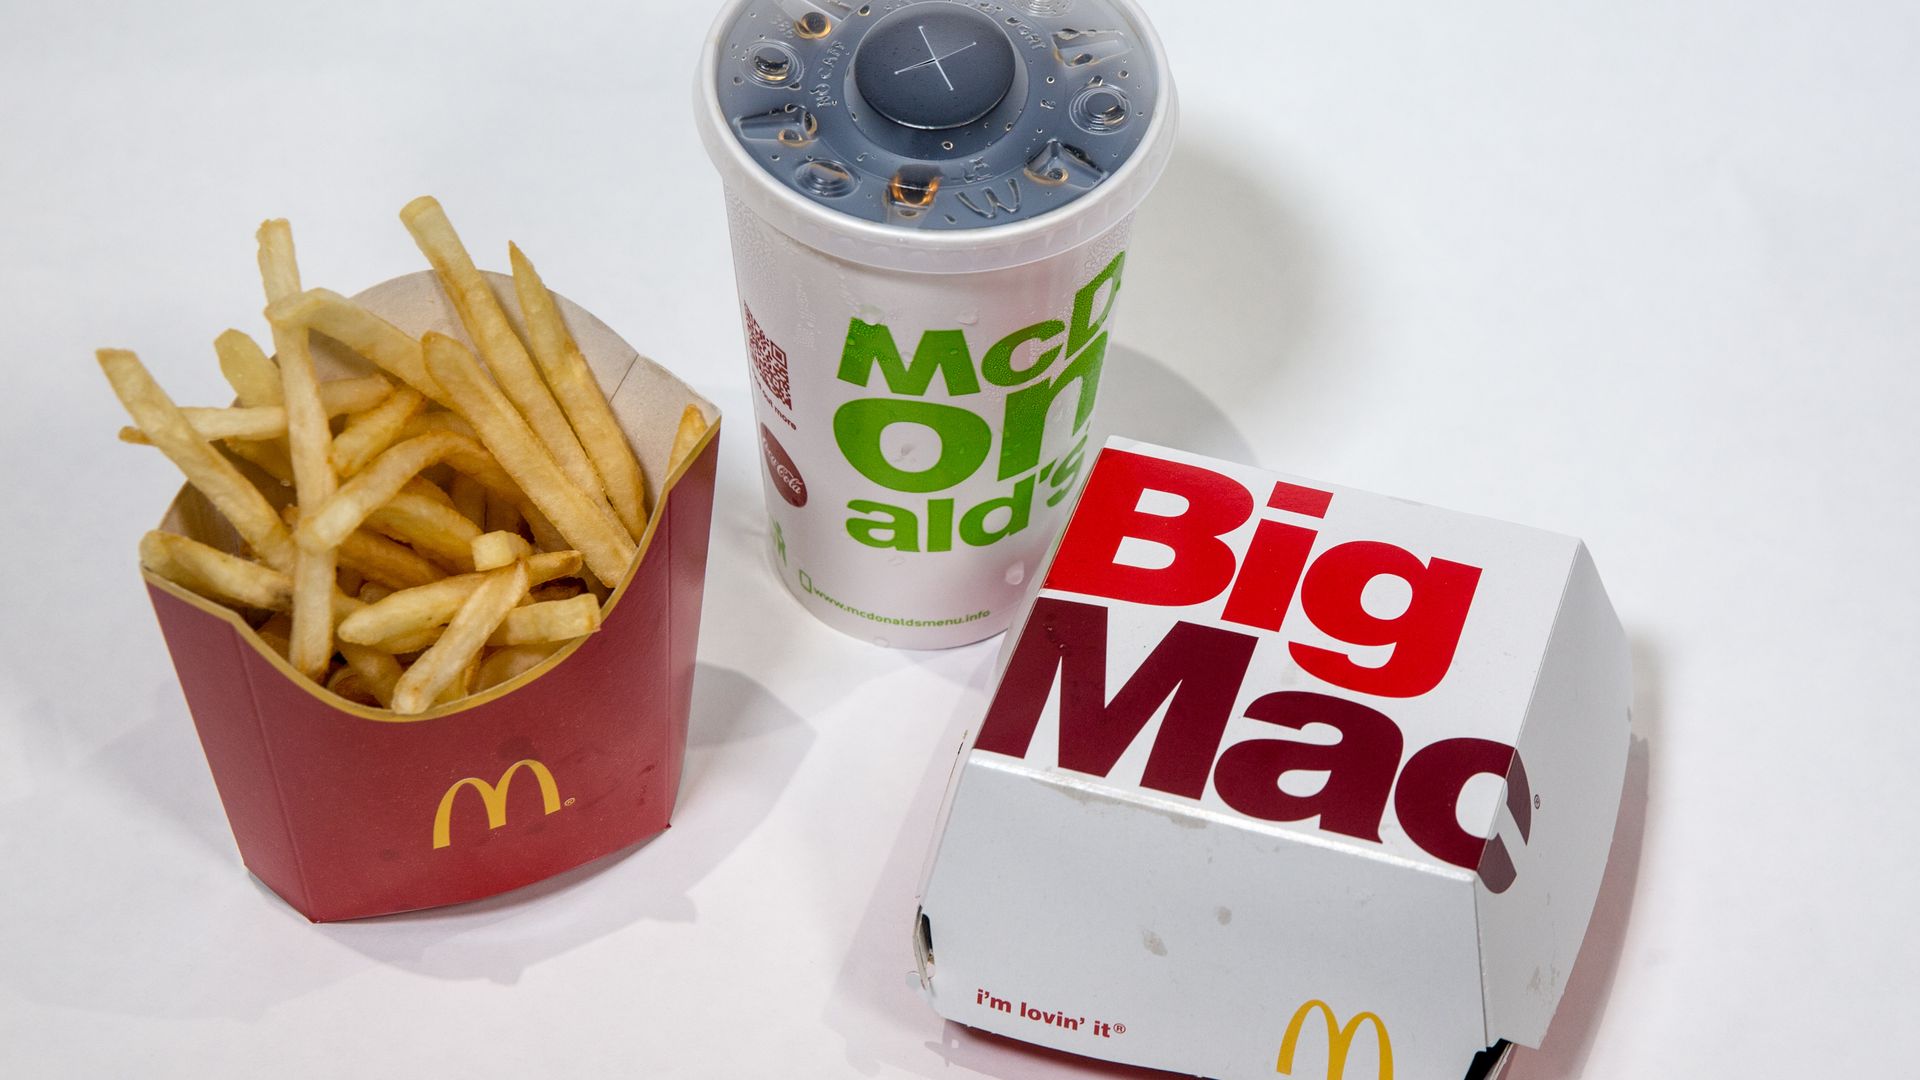 McDonald's BigMac box, soda cup and fries